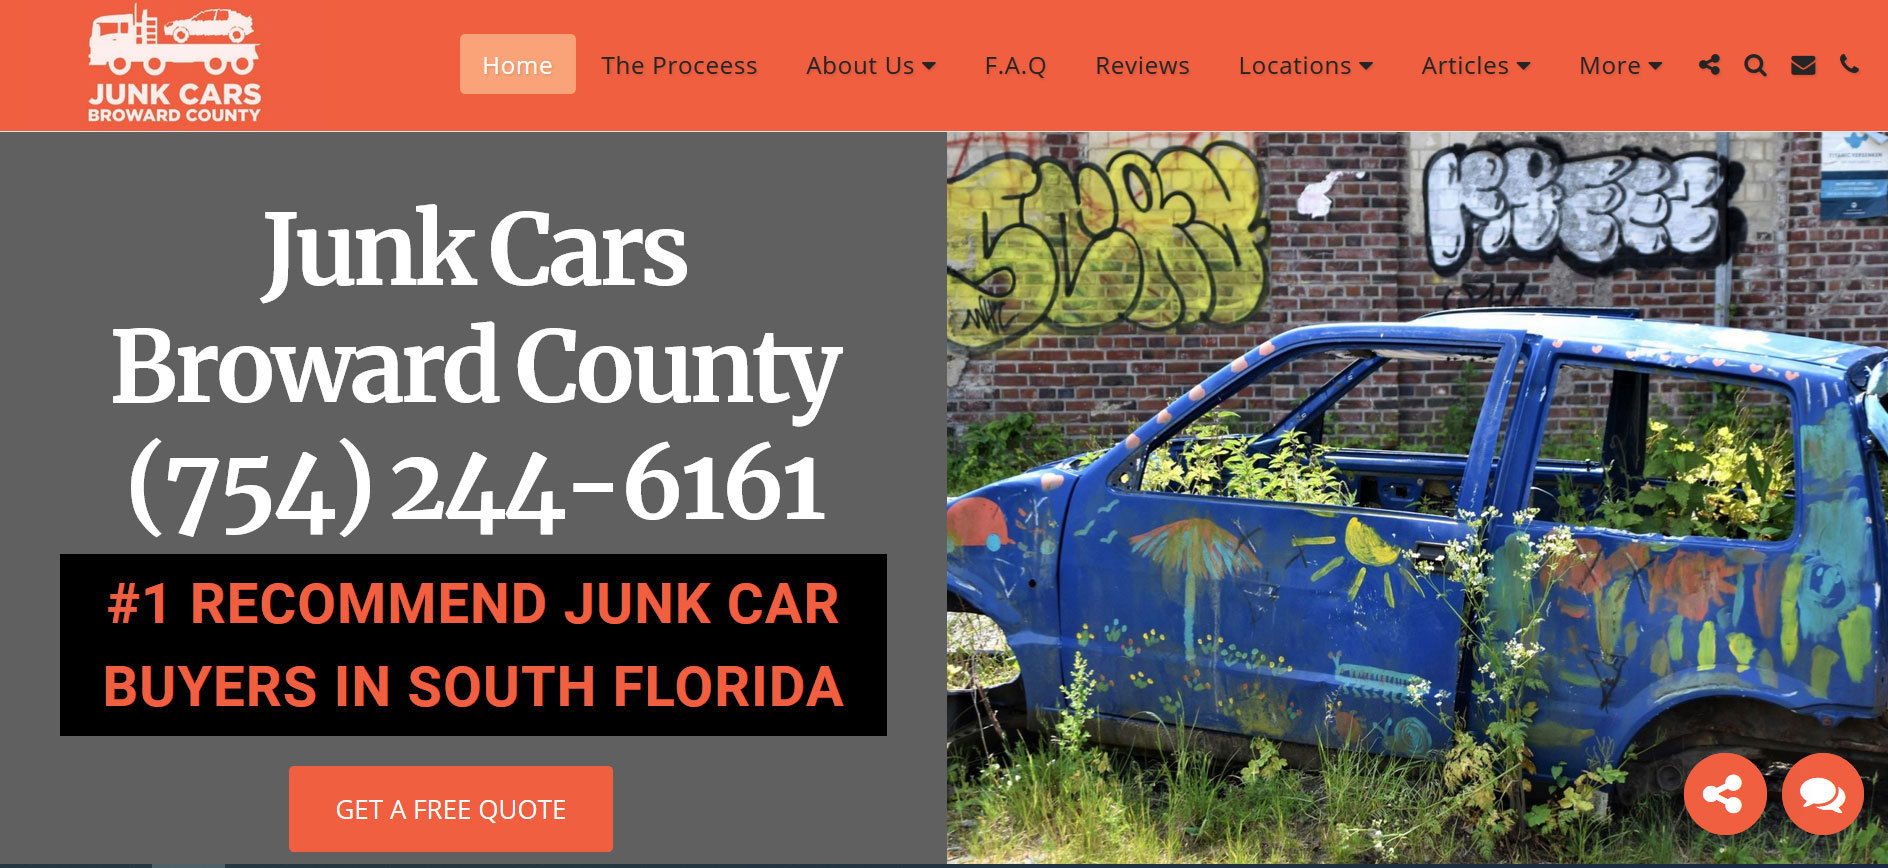 Junk Cars Broward County